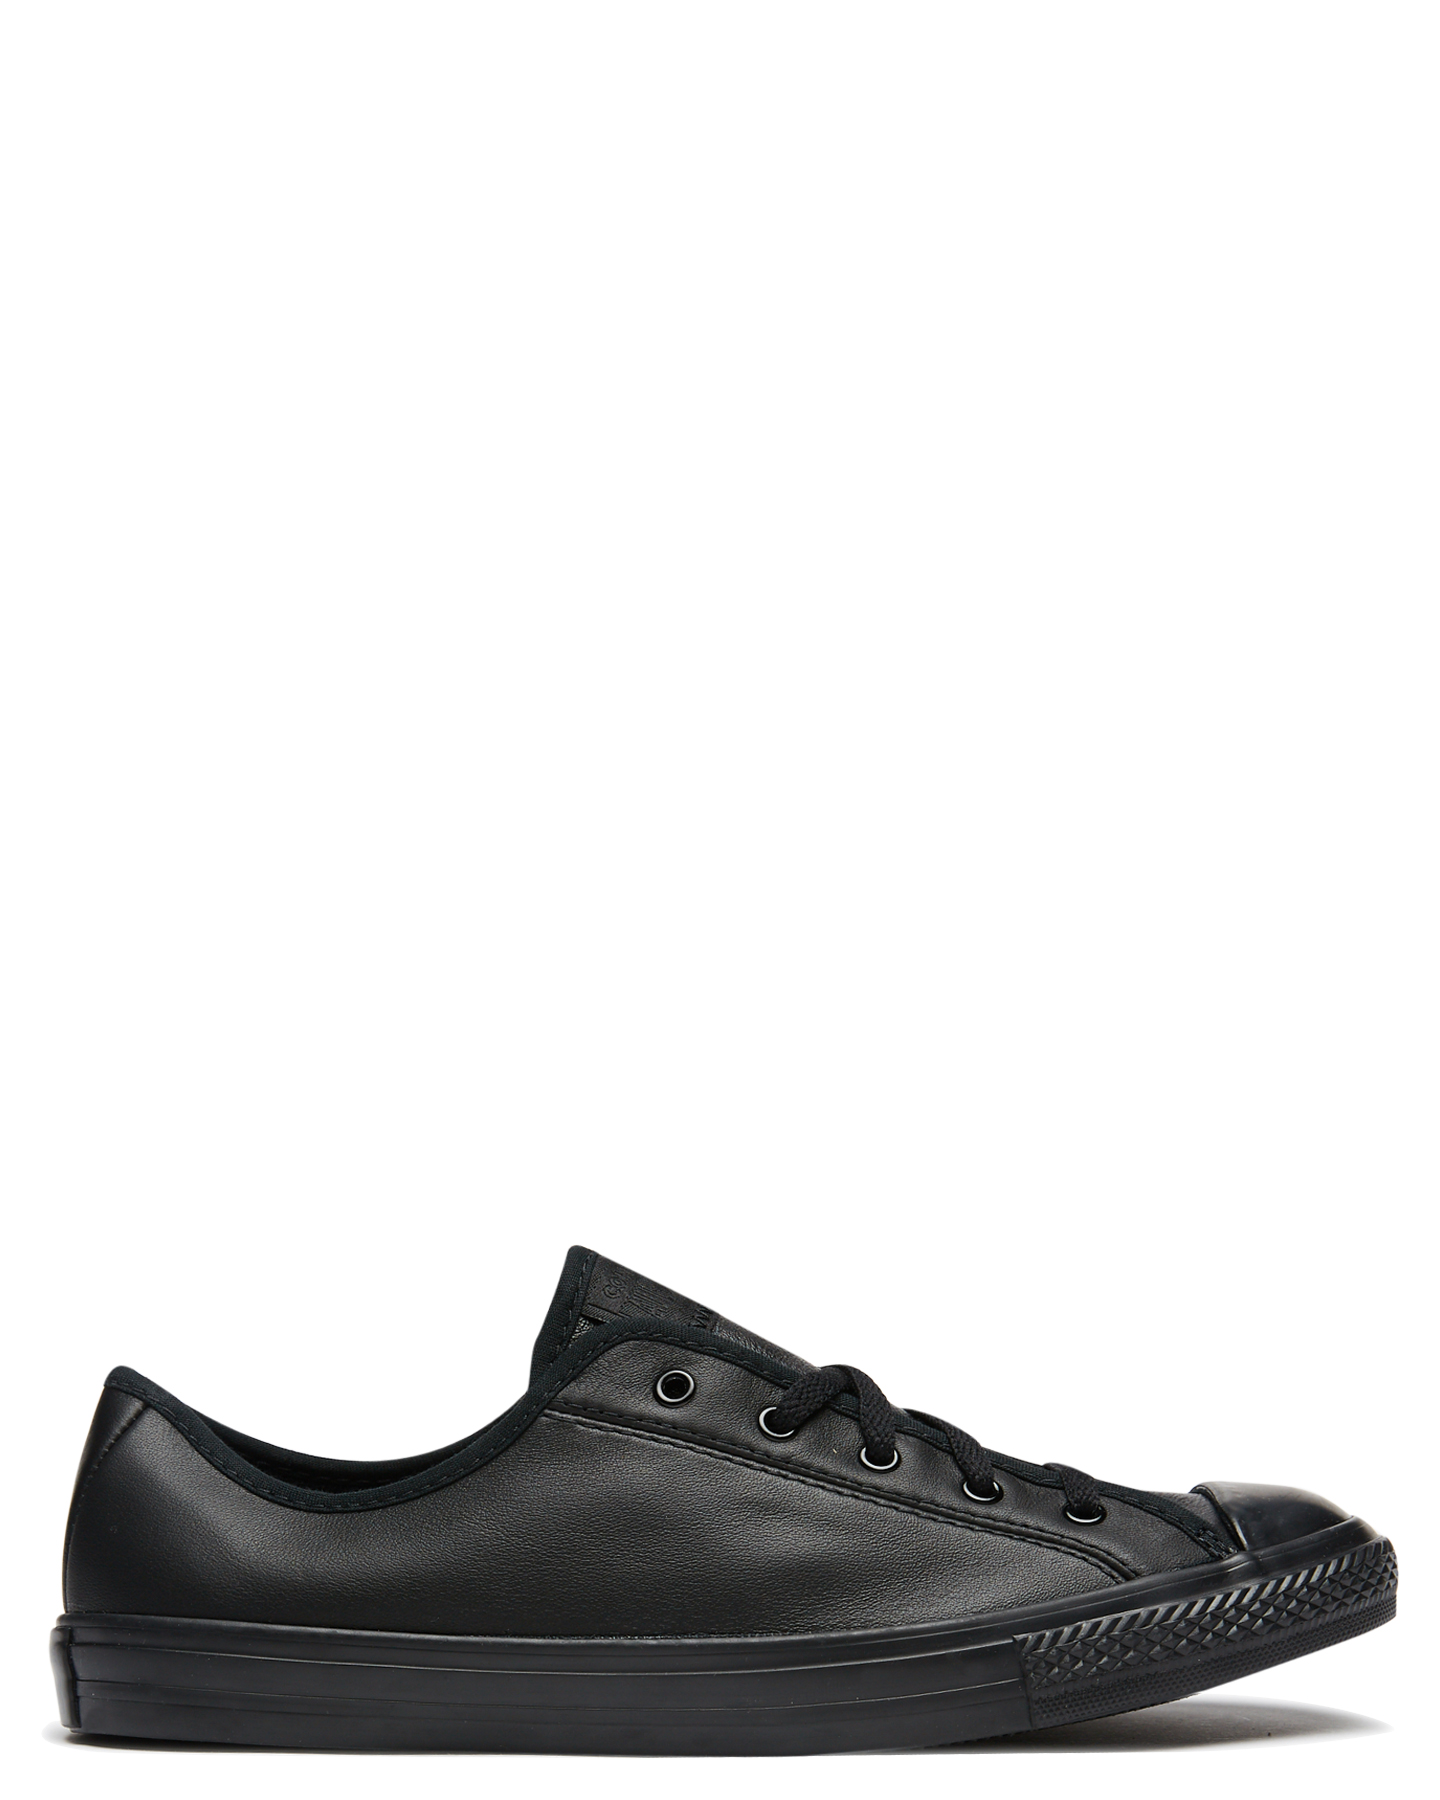 Star Dainty Leather Shoe 